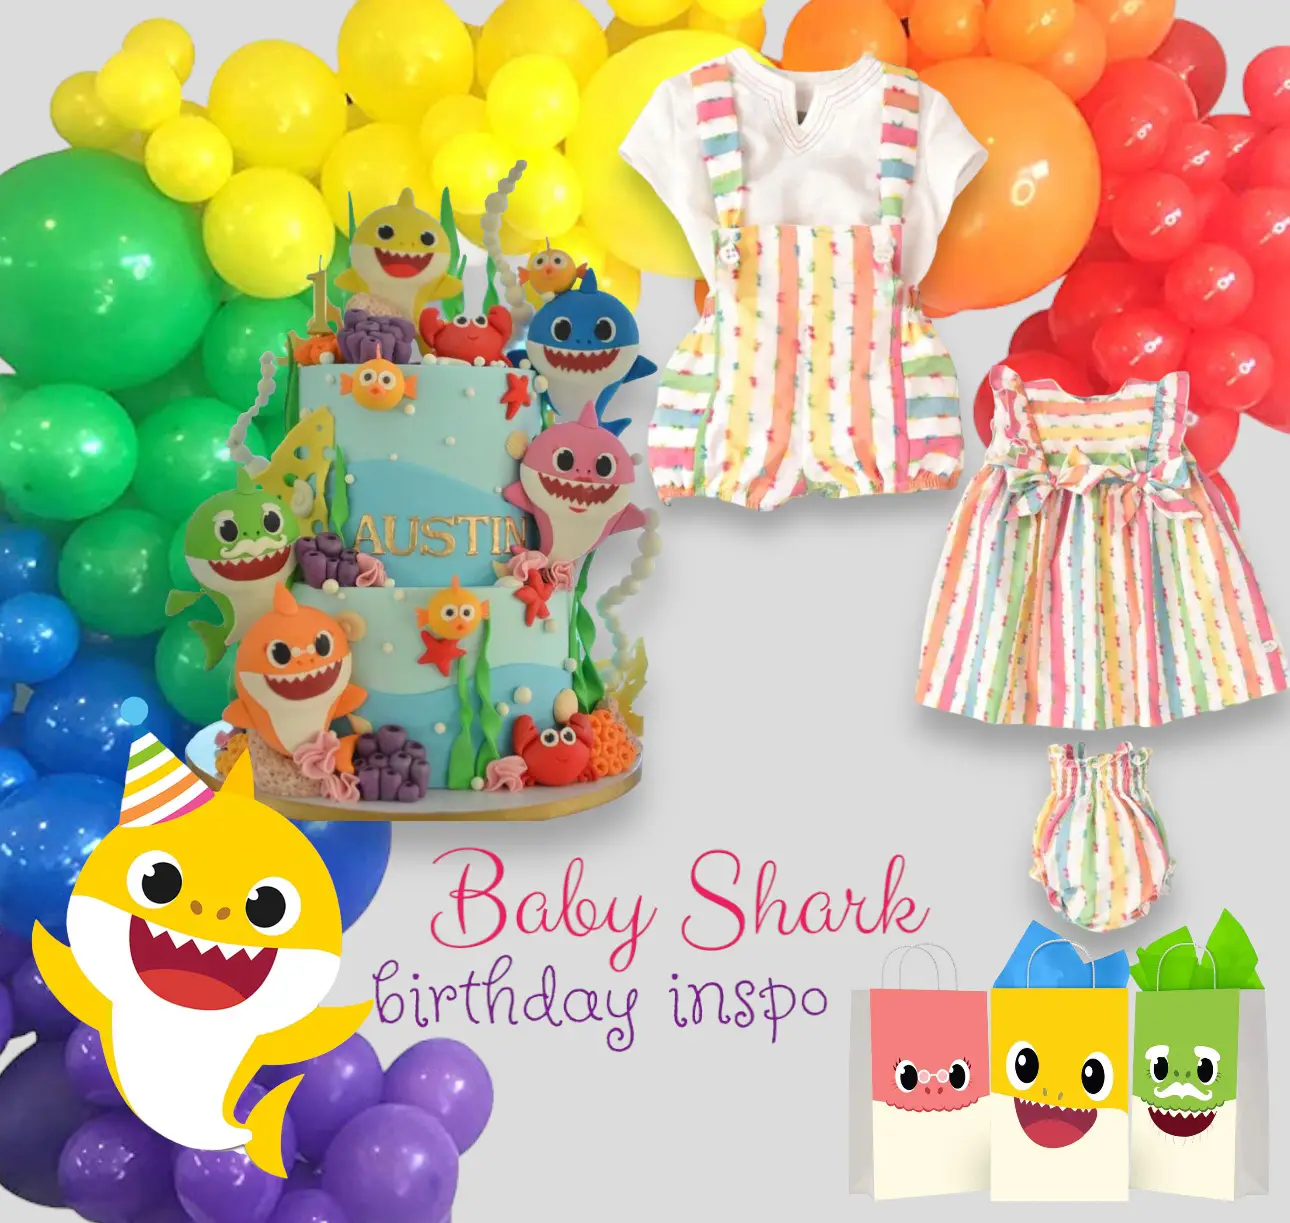 Baby Shark Birthday Party Girl - Lemon8 Search